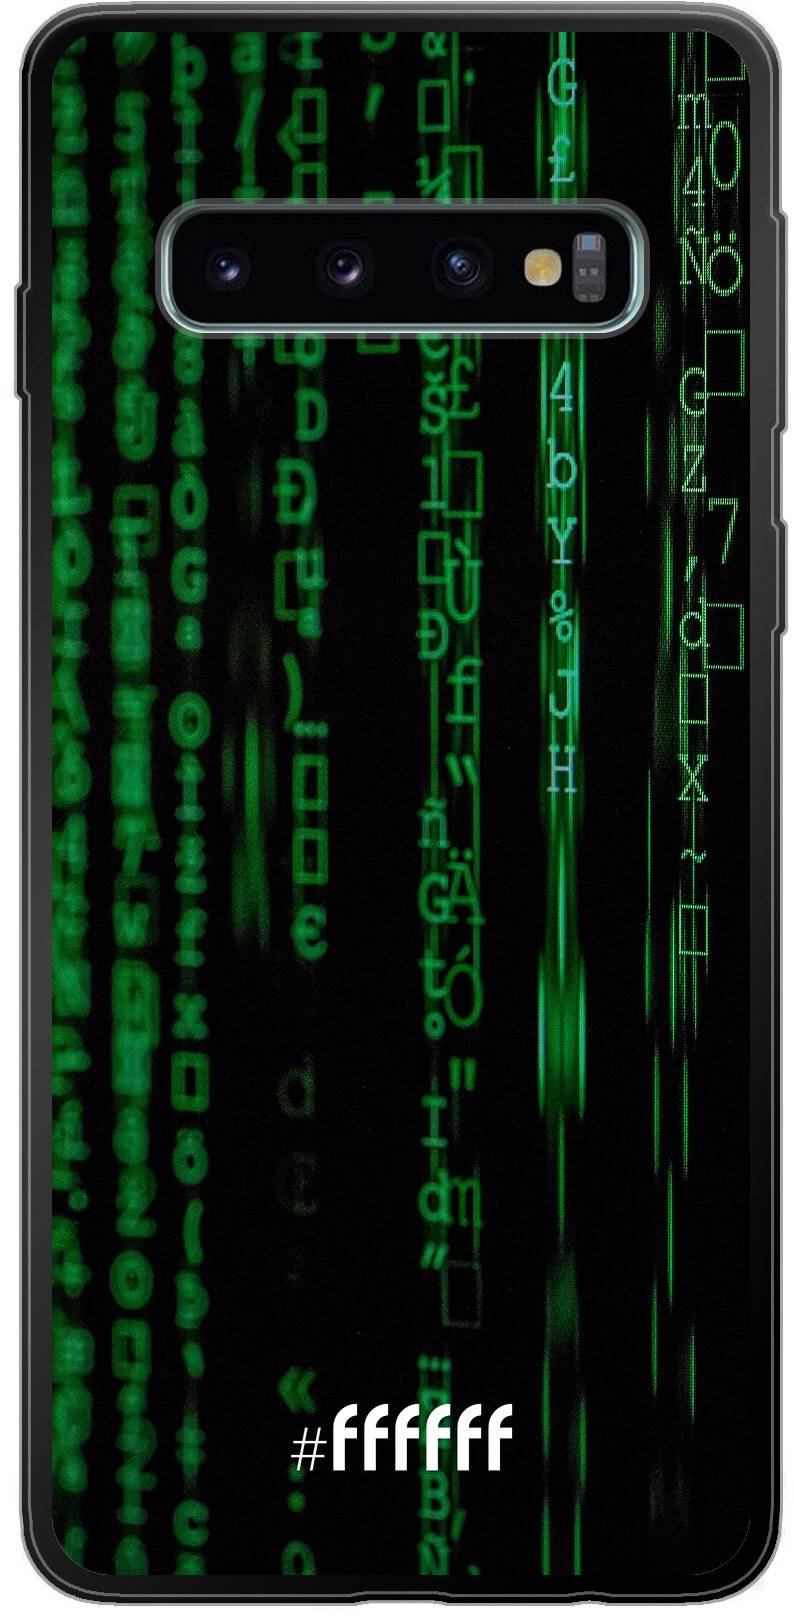 Hacking The Matrix Galaxy S10